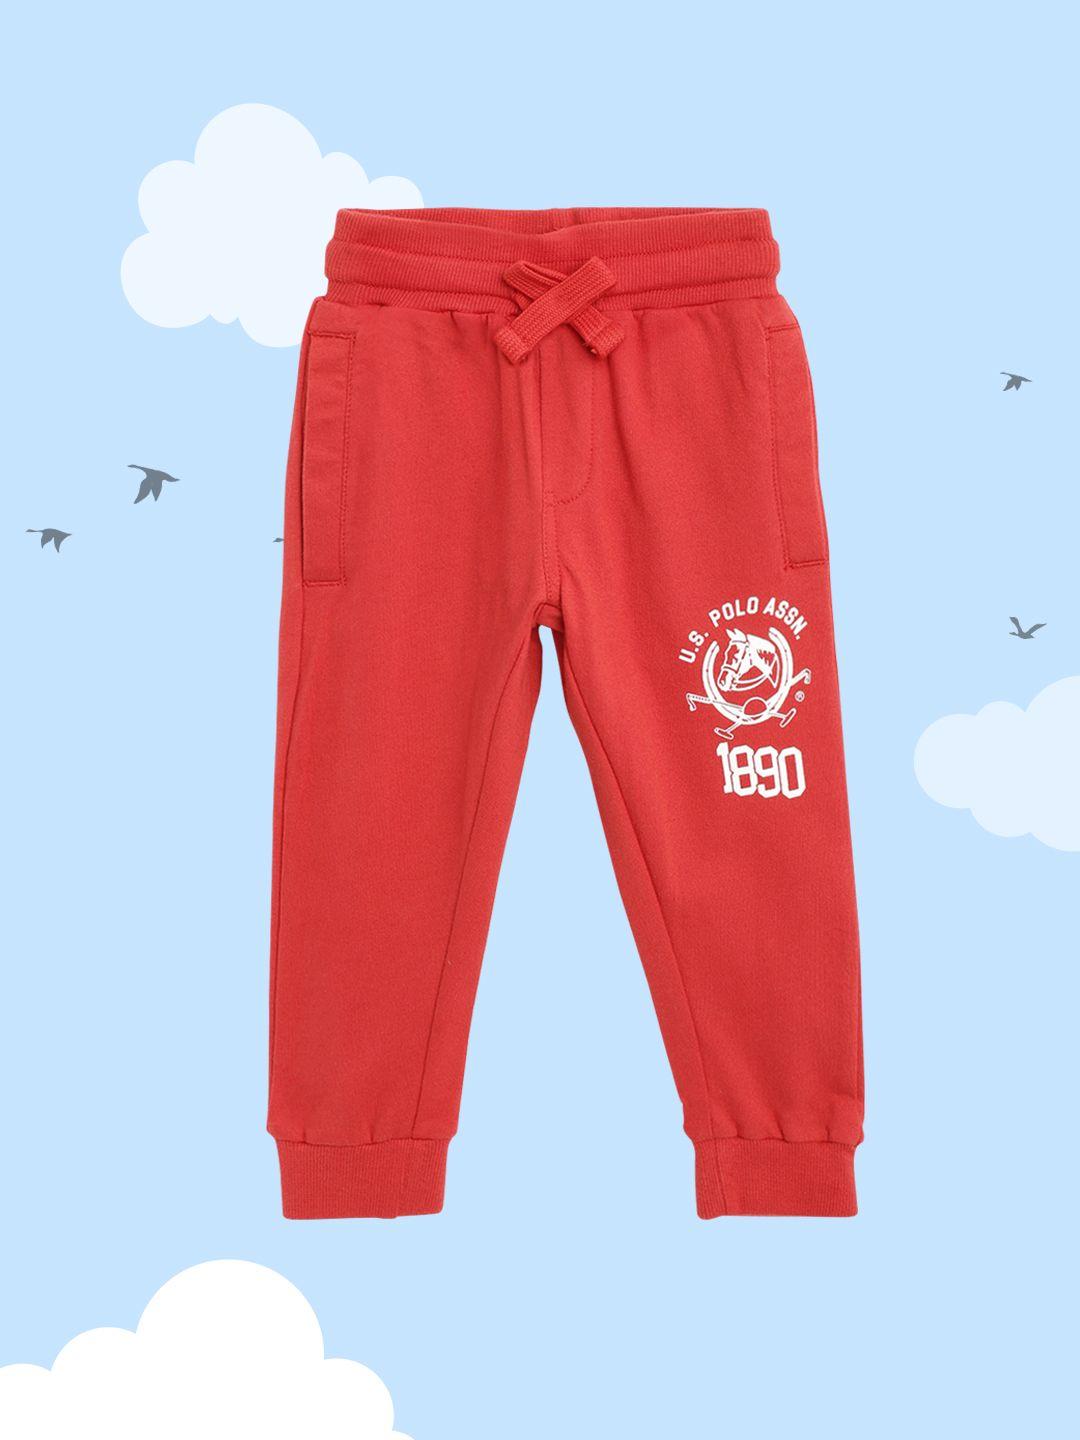 u.s. polo assn. kids boys red pure cotton brand logo detail joggers